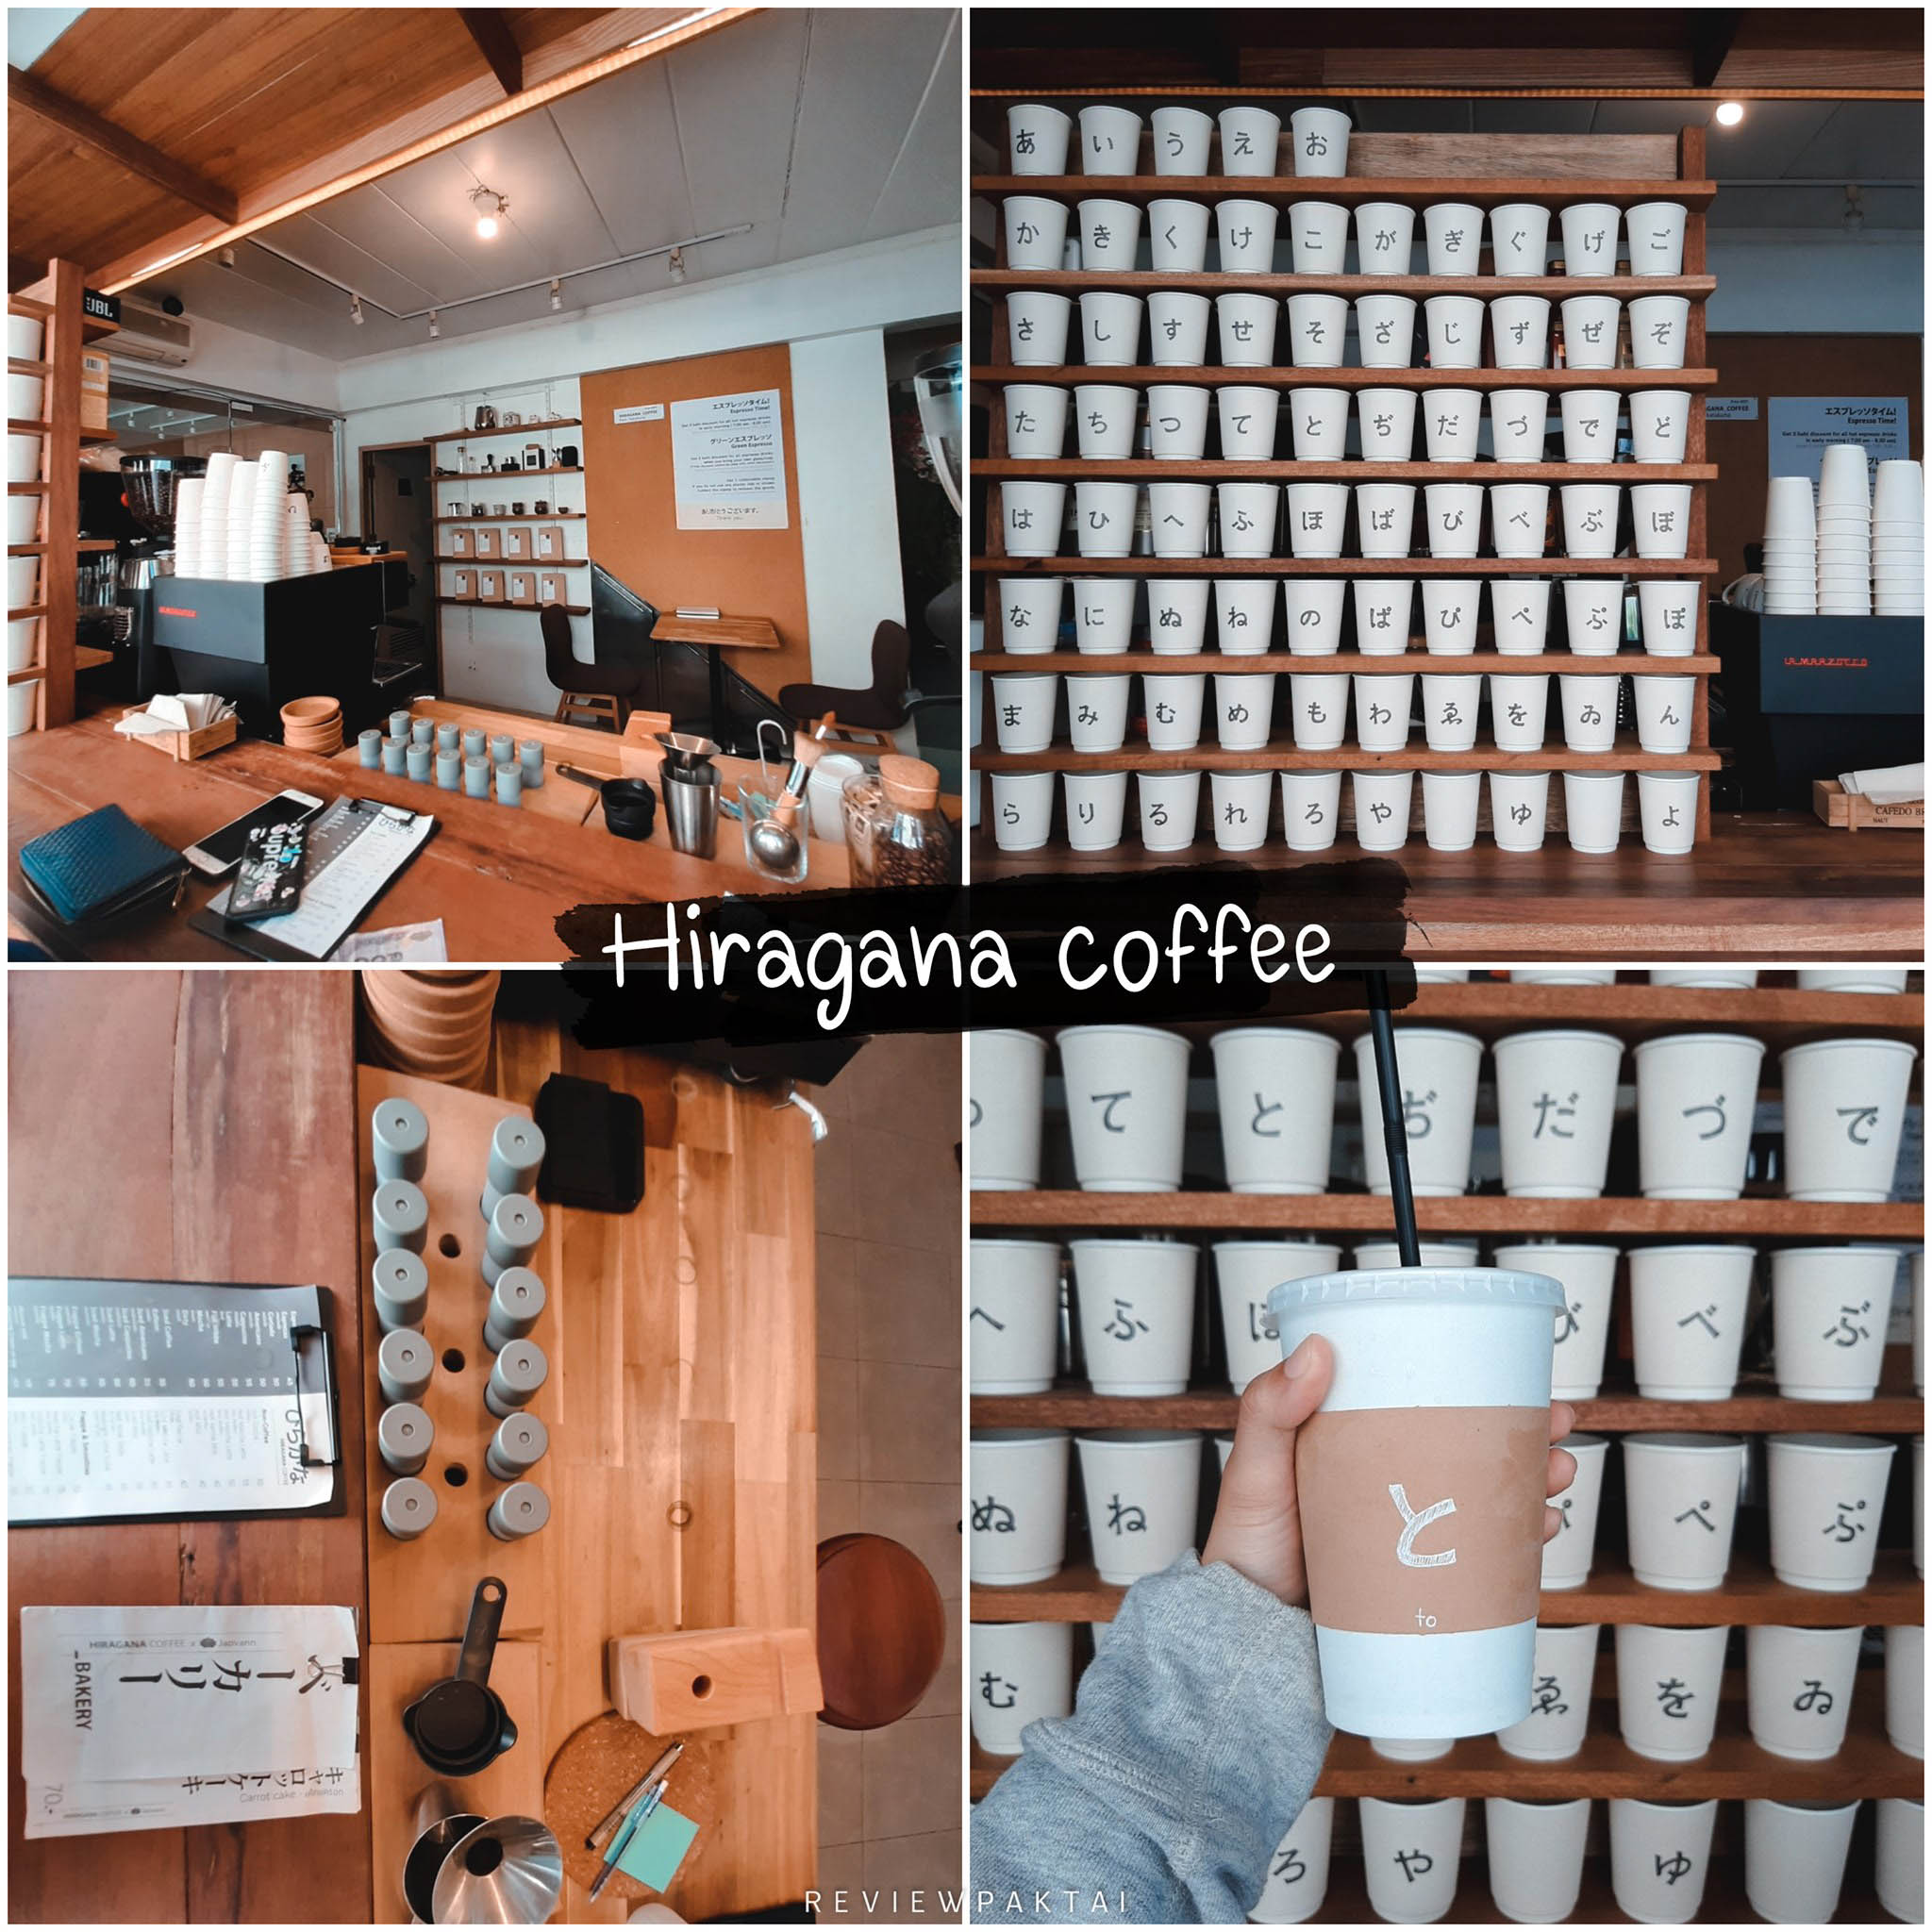 Hiragana coffee ภูเก็ต ร้านน่ารัก สไตล์ญี่ปุ่น ถึงจะเล็กแต่ก็ไม่ธรรมดามาถ่ายรูปสวยๆเช็คอินหลายมุมกันได้เลย 